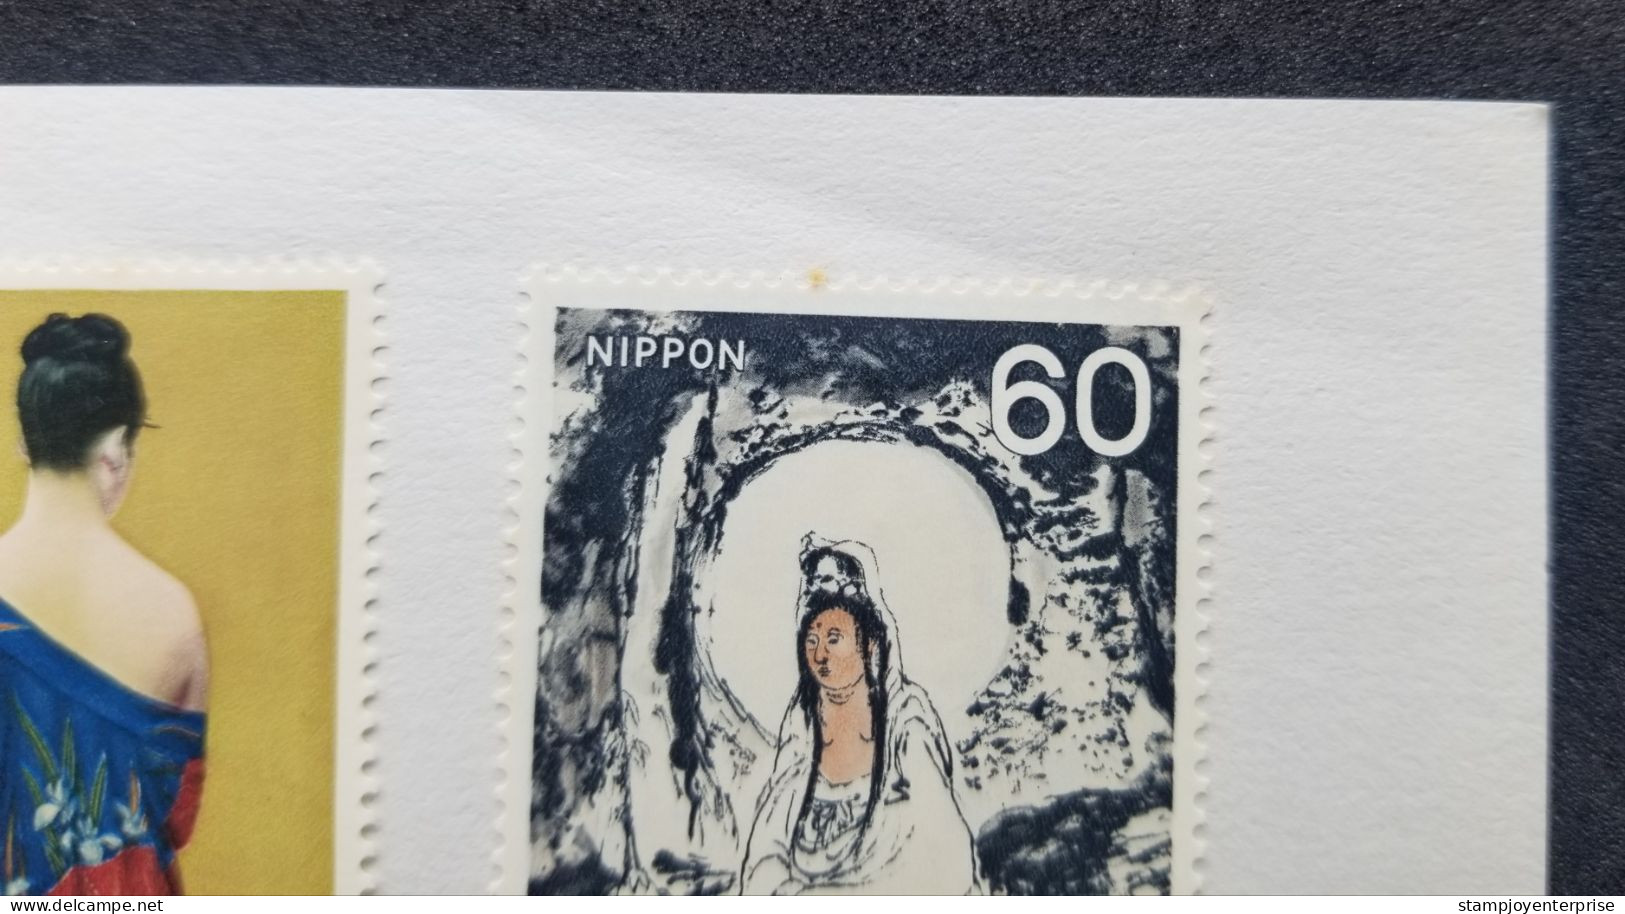 Japan Modern Japanese Art XIII 1982 Buddha Kuan Yin Women Costume (FDC) *card *see Scan - Lettres & Documents